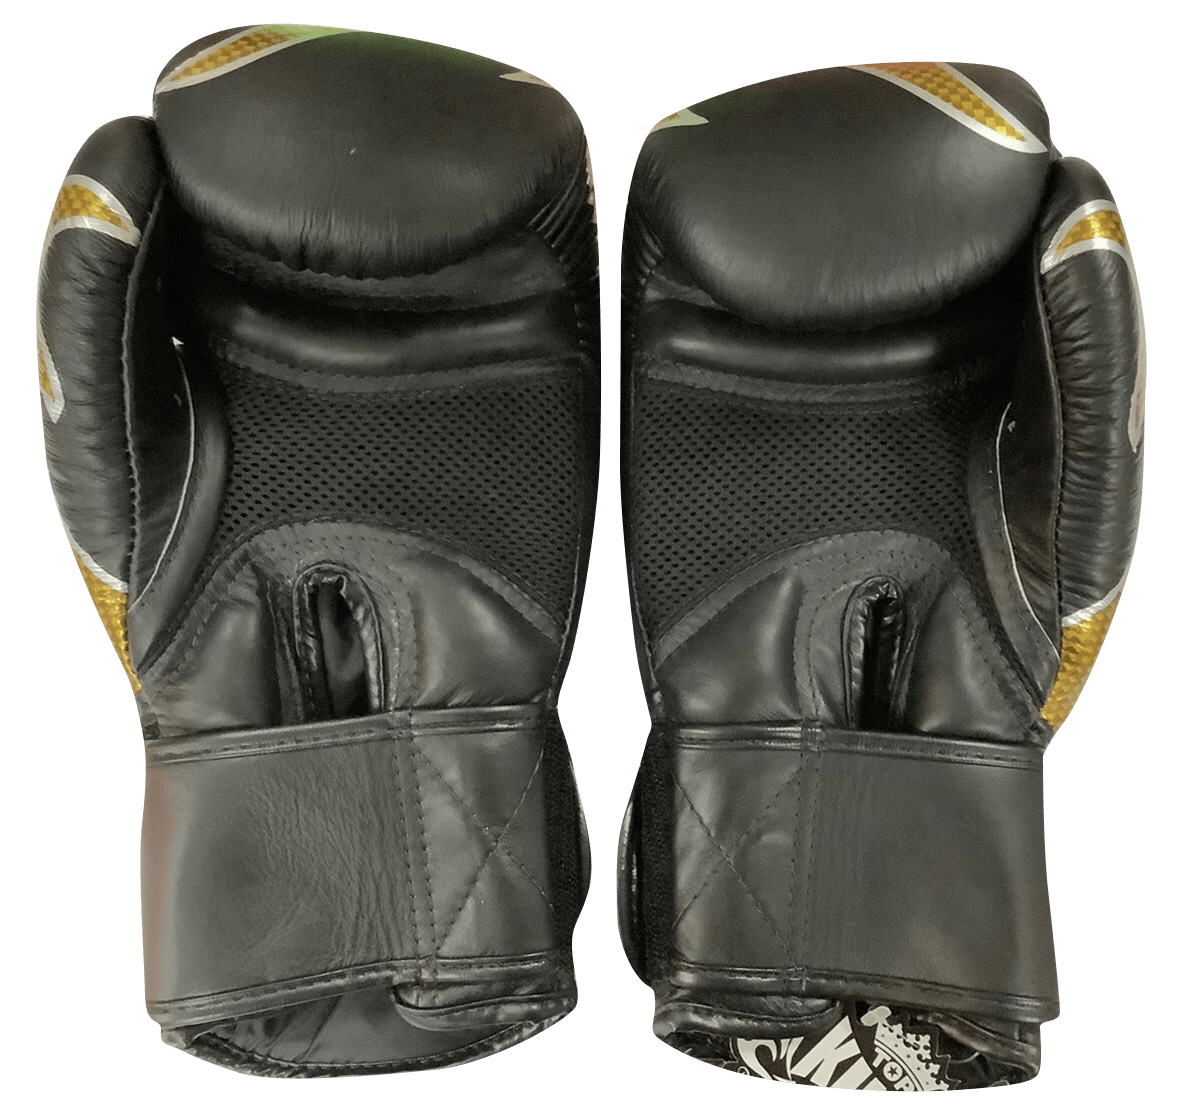 Top King Boxing Gloves Empower creativity TKBGEM01 Black Gold Air - SUPER EXPORT SHOP